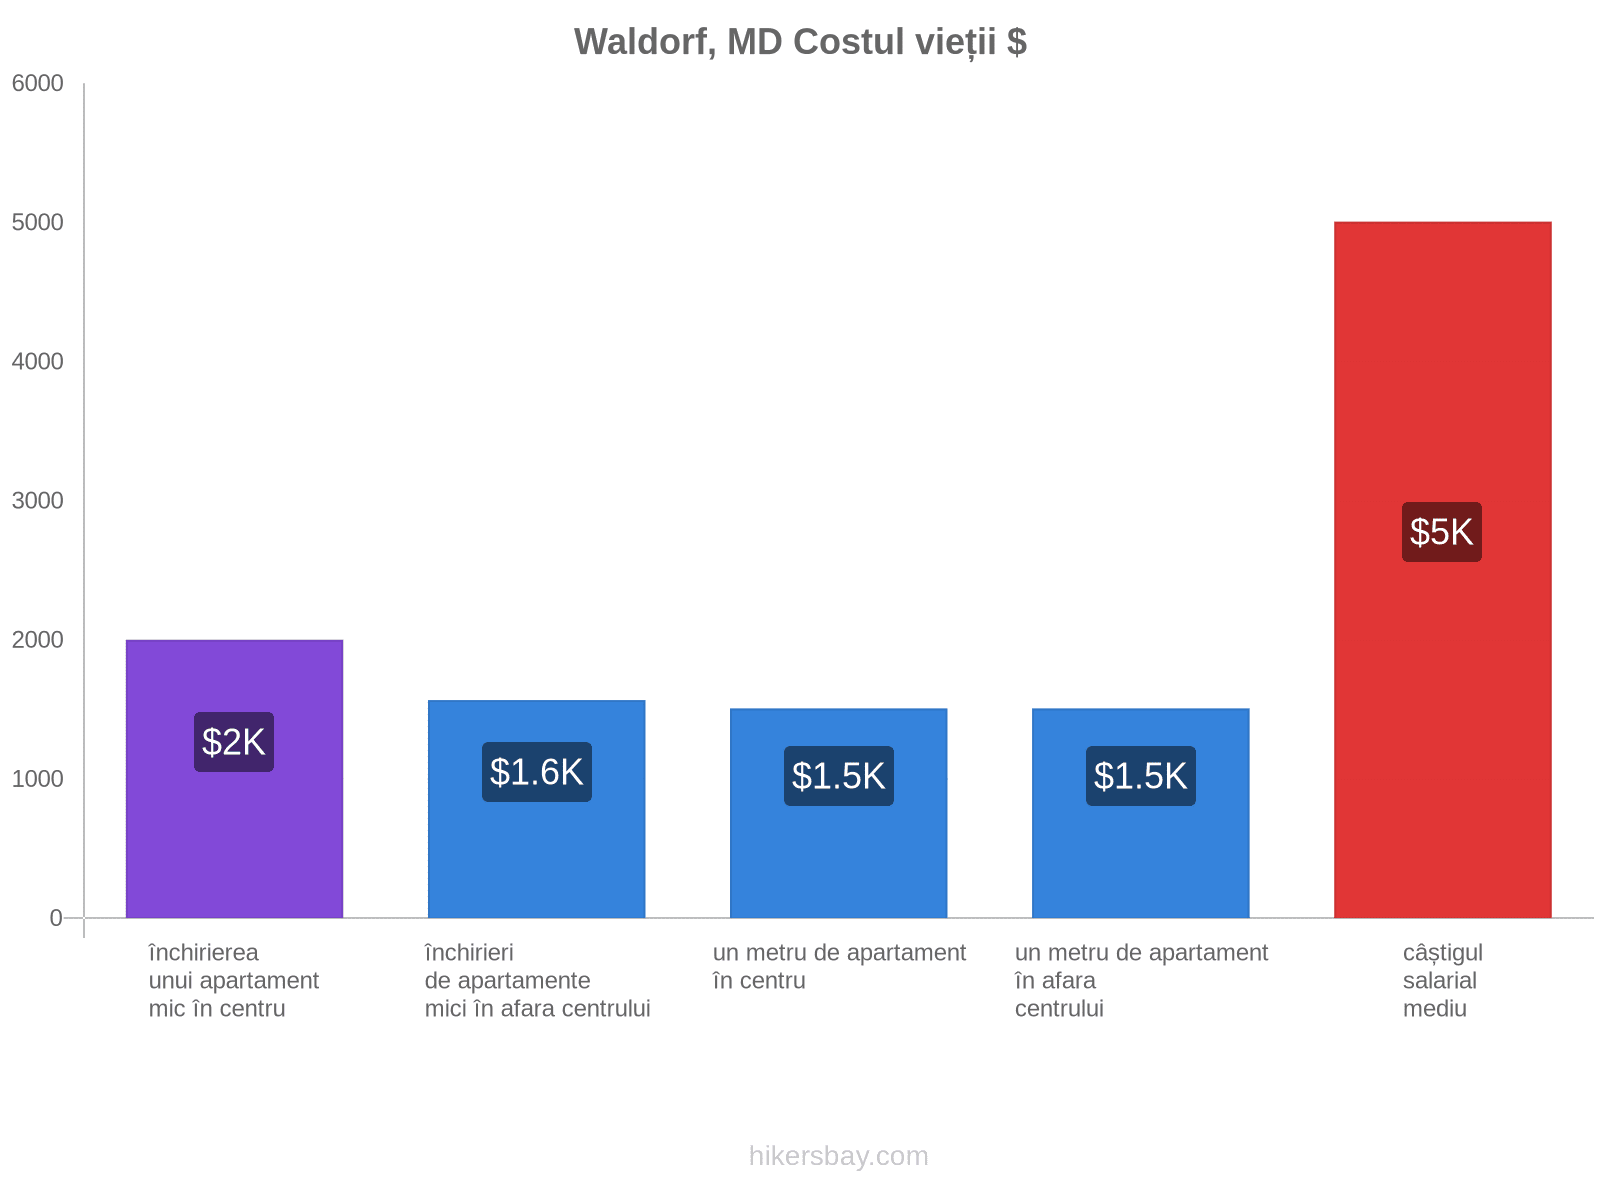 Waldorf, MD costul vieții hikersbay.com